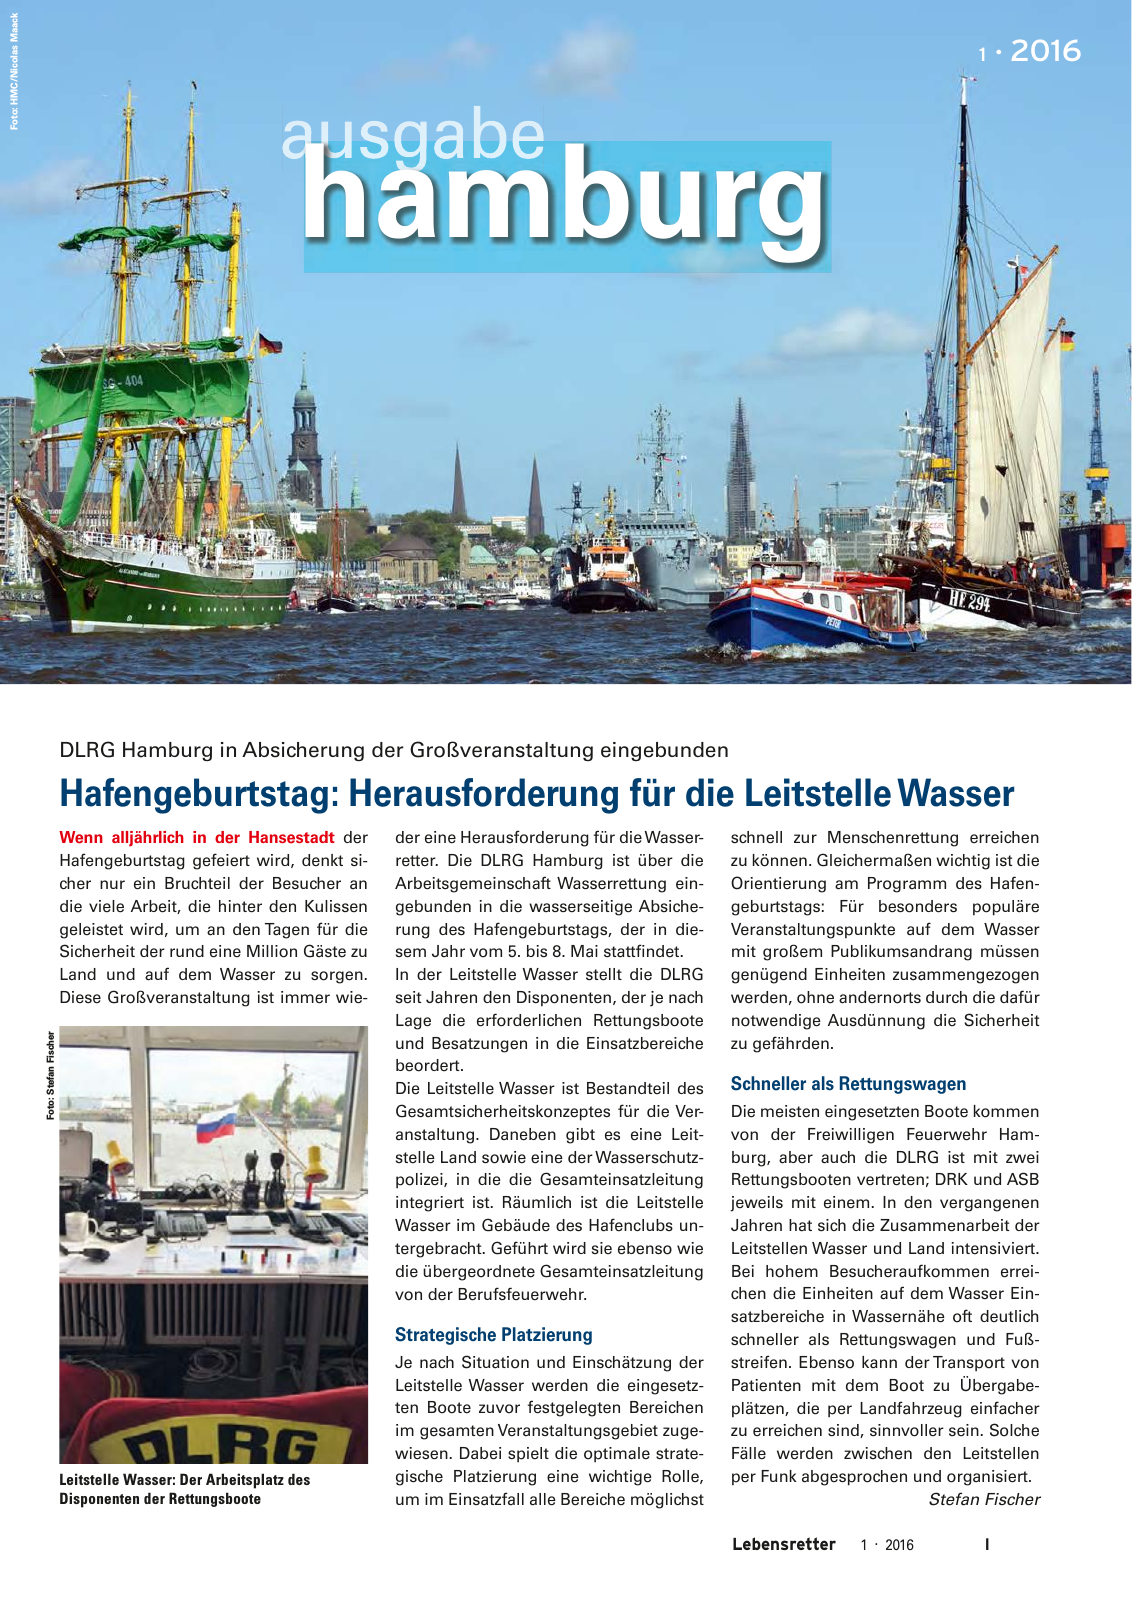 Vorschau Lebensretter 1/2016 - Regionalausgabe Hamburg Seite 3